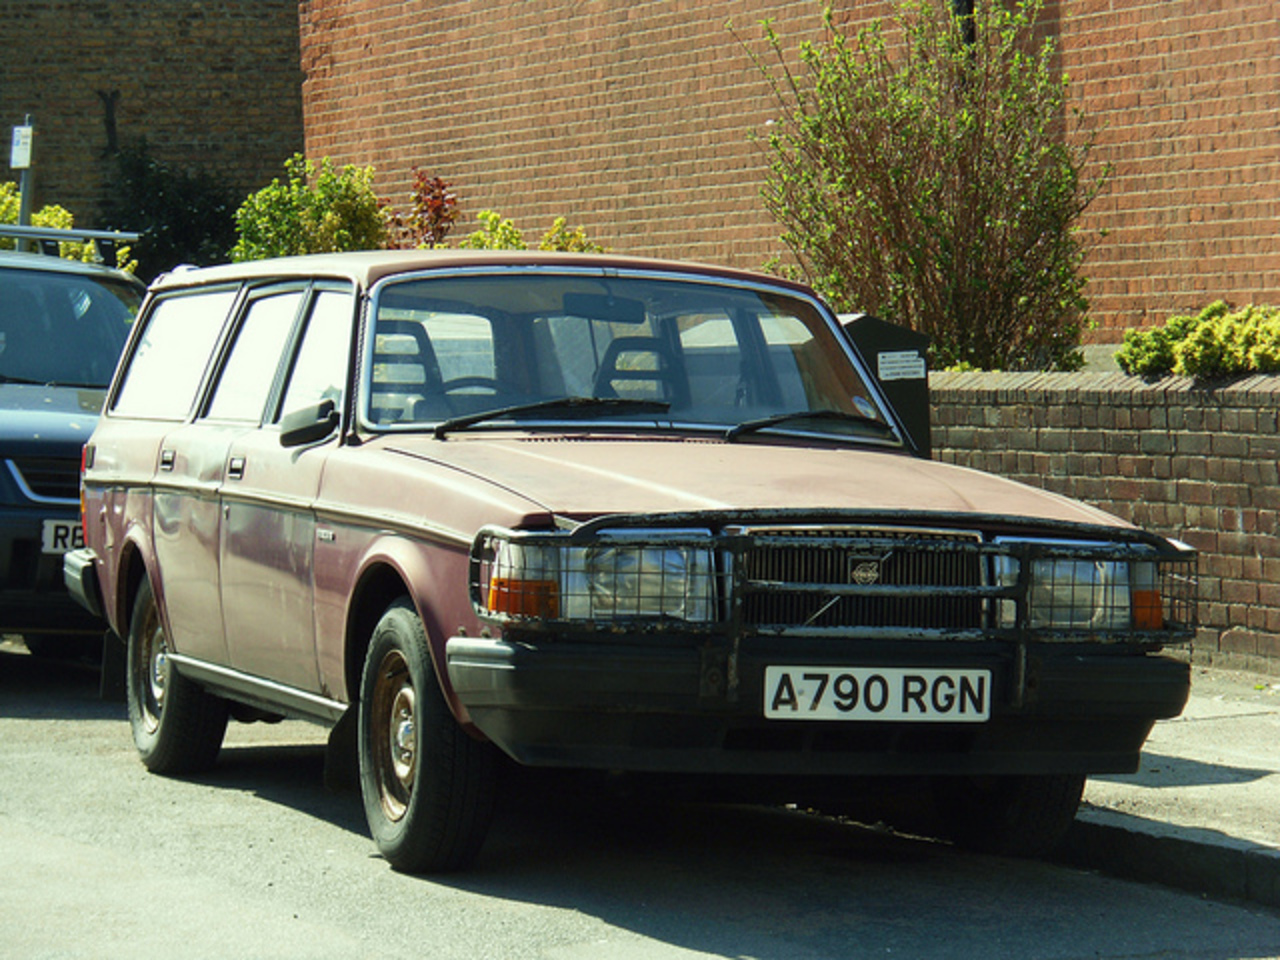 1983 Volvo 240 DL 2.1 Estate. | Flickr - Photo Sharing!